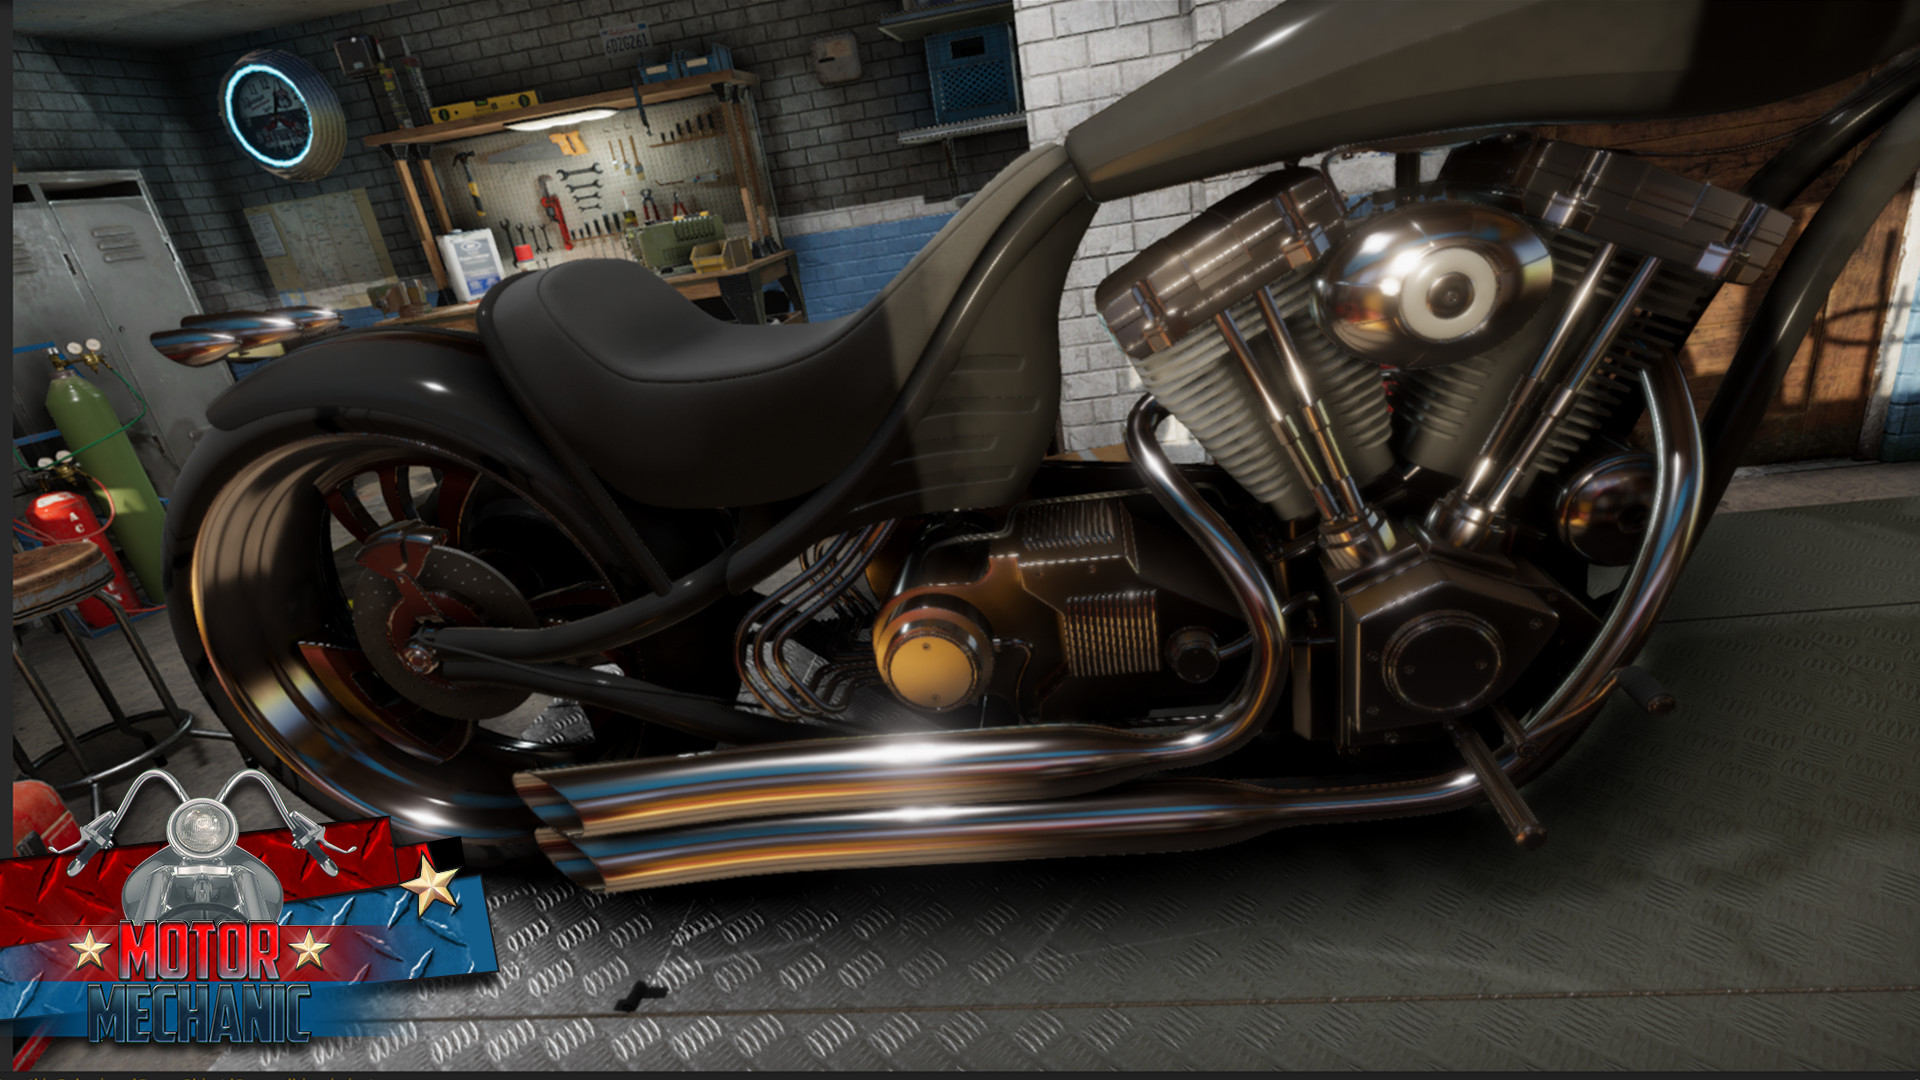 Motorcycle Mechanic Simulator on Steam